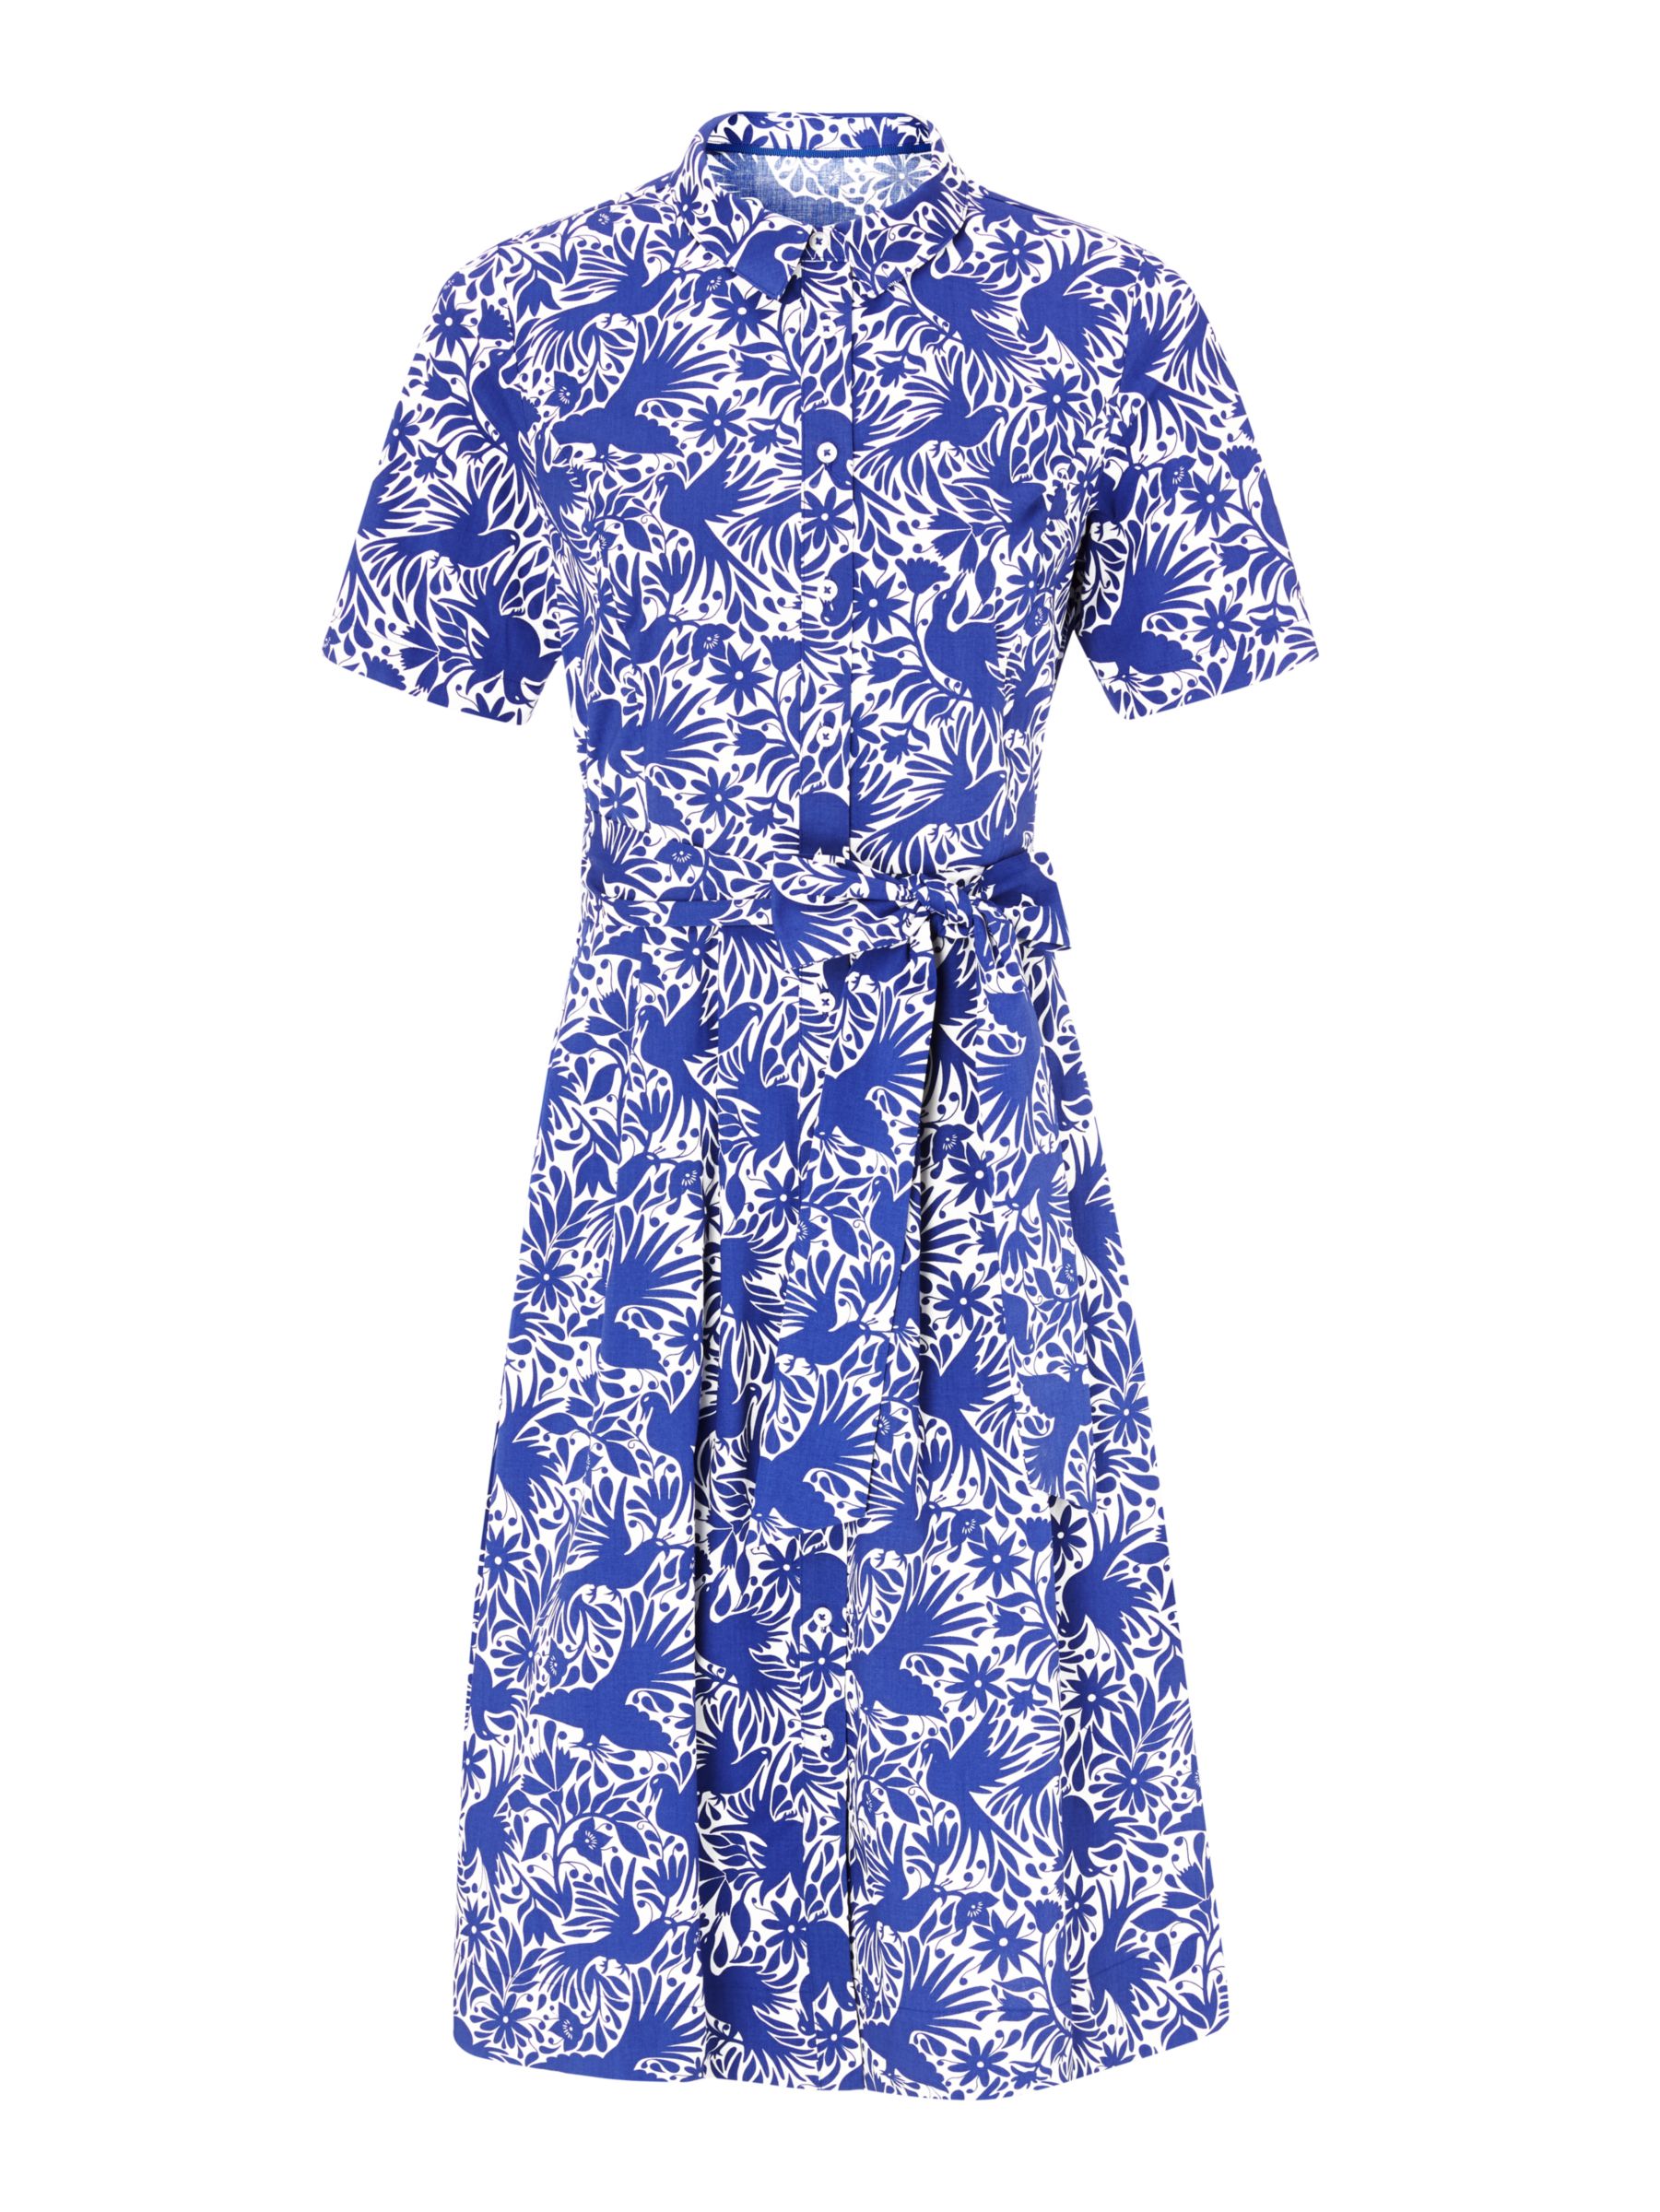 Boden Anastasia Shirt Dress, Lapis/White at John Lewis & Partners